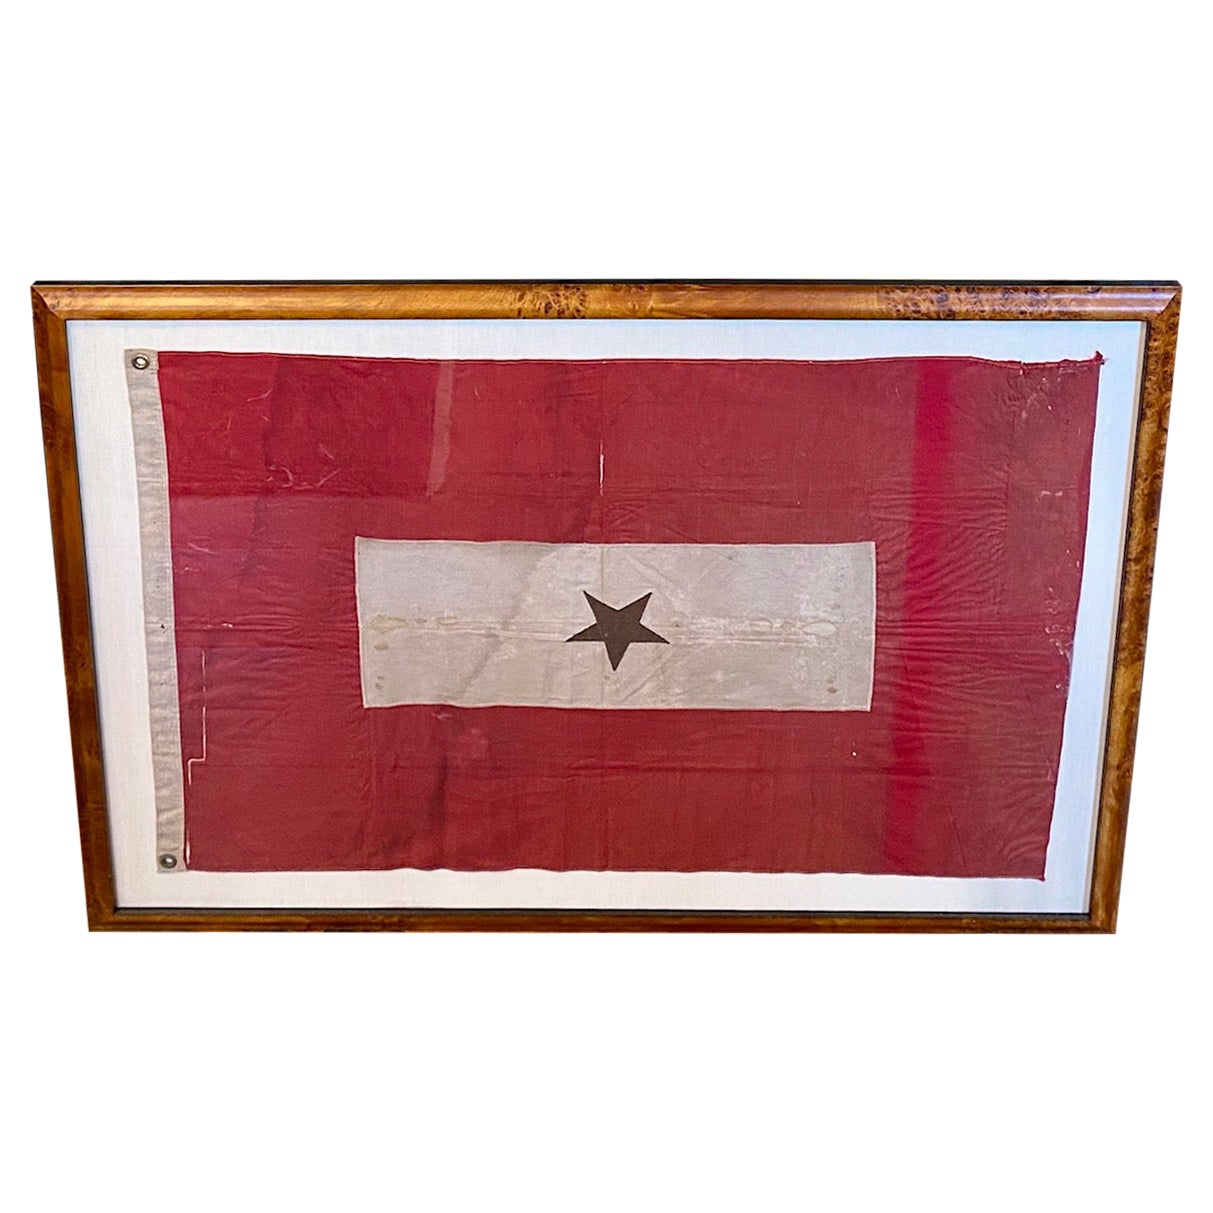 Historic American Blue Star Flag, circa 1917